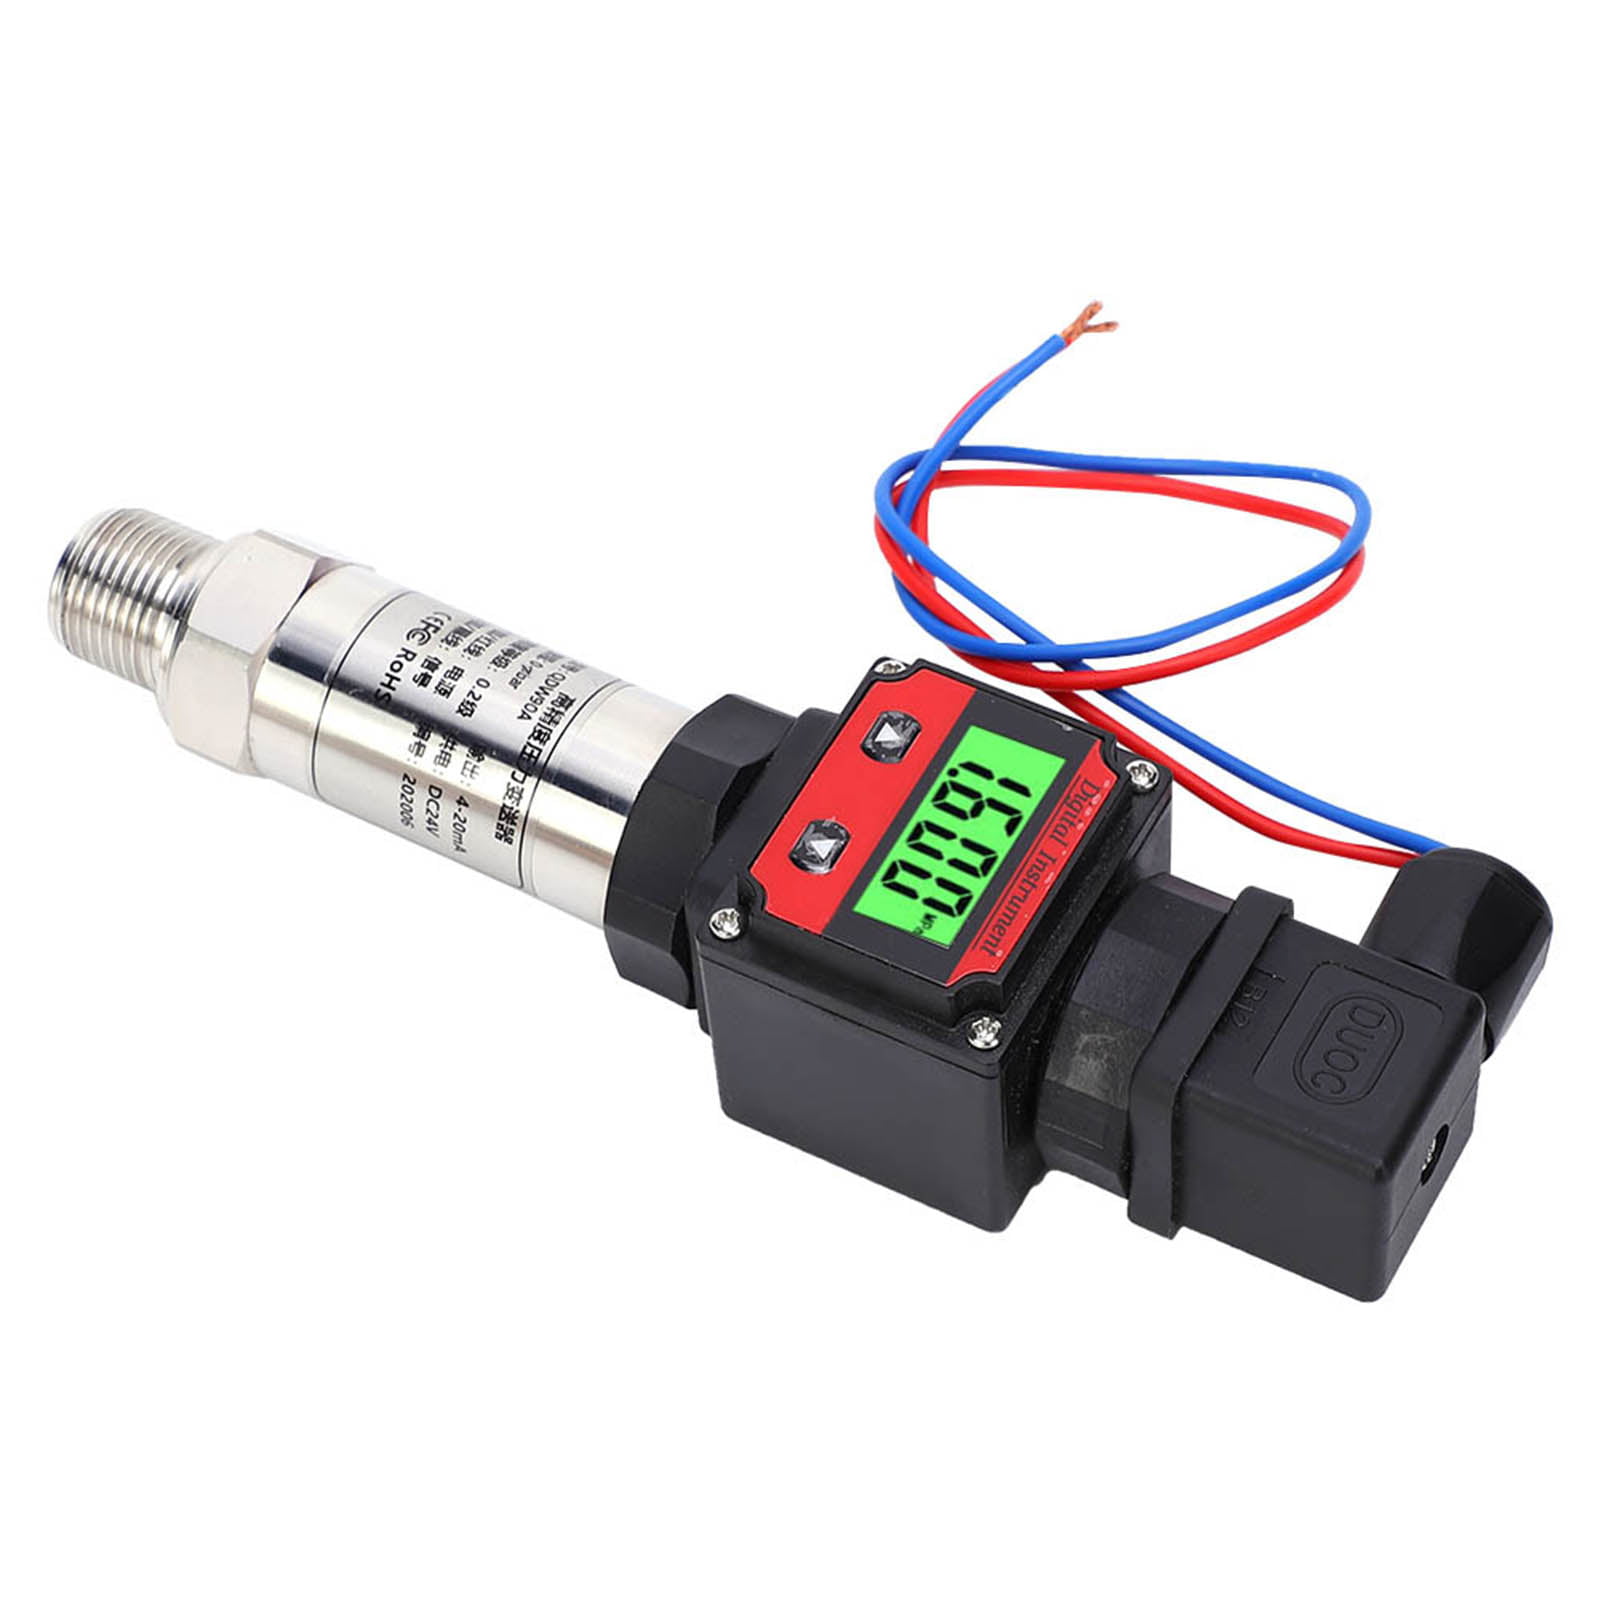 0-700Kpa with Digital LED Display Pressure Transmitter 24V DC 4‑20mA Compatibility Pressure Sensor Measuring Hydraulic for Measuring Oil Pressure 